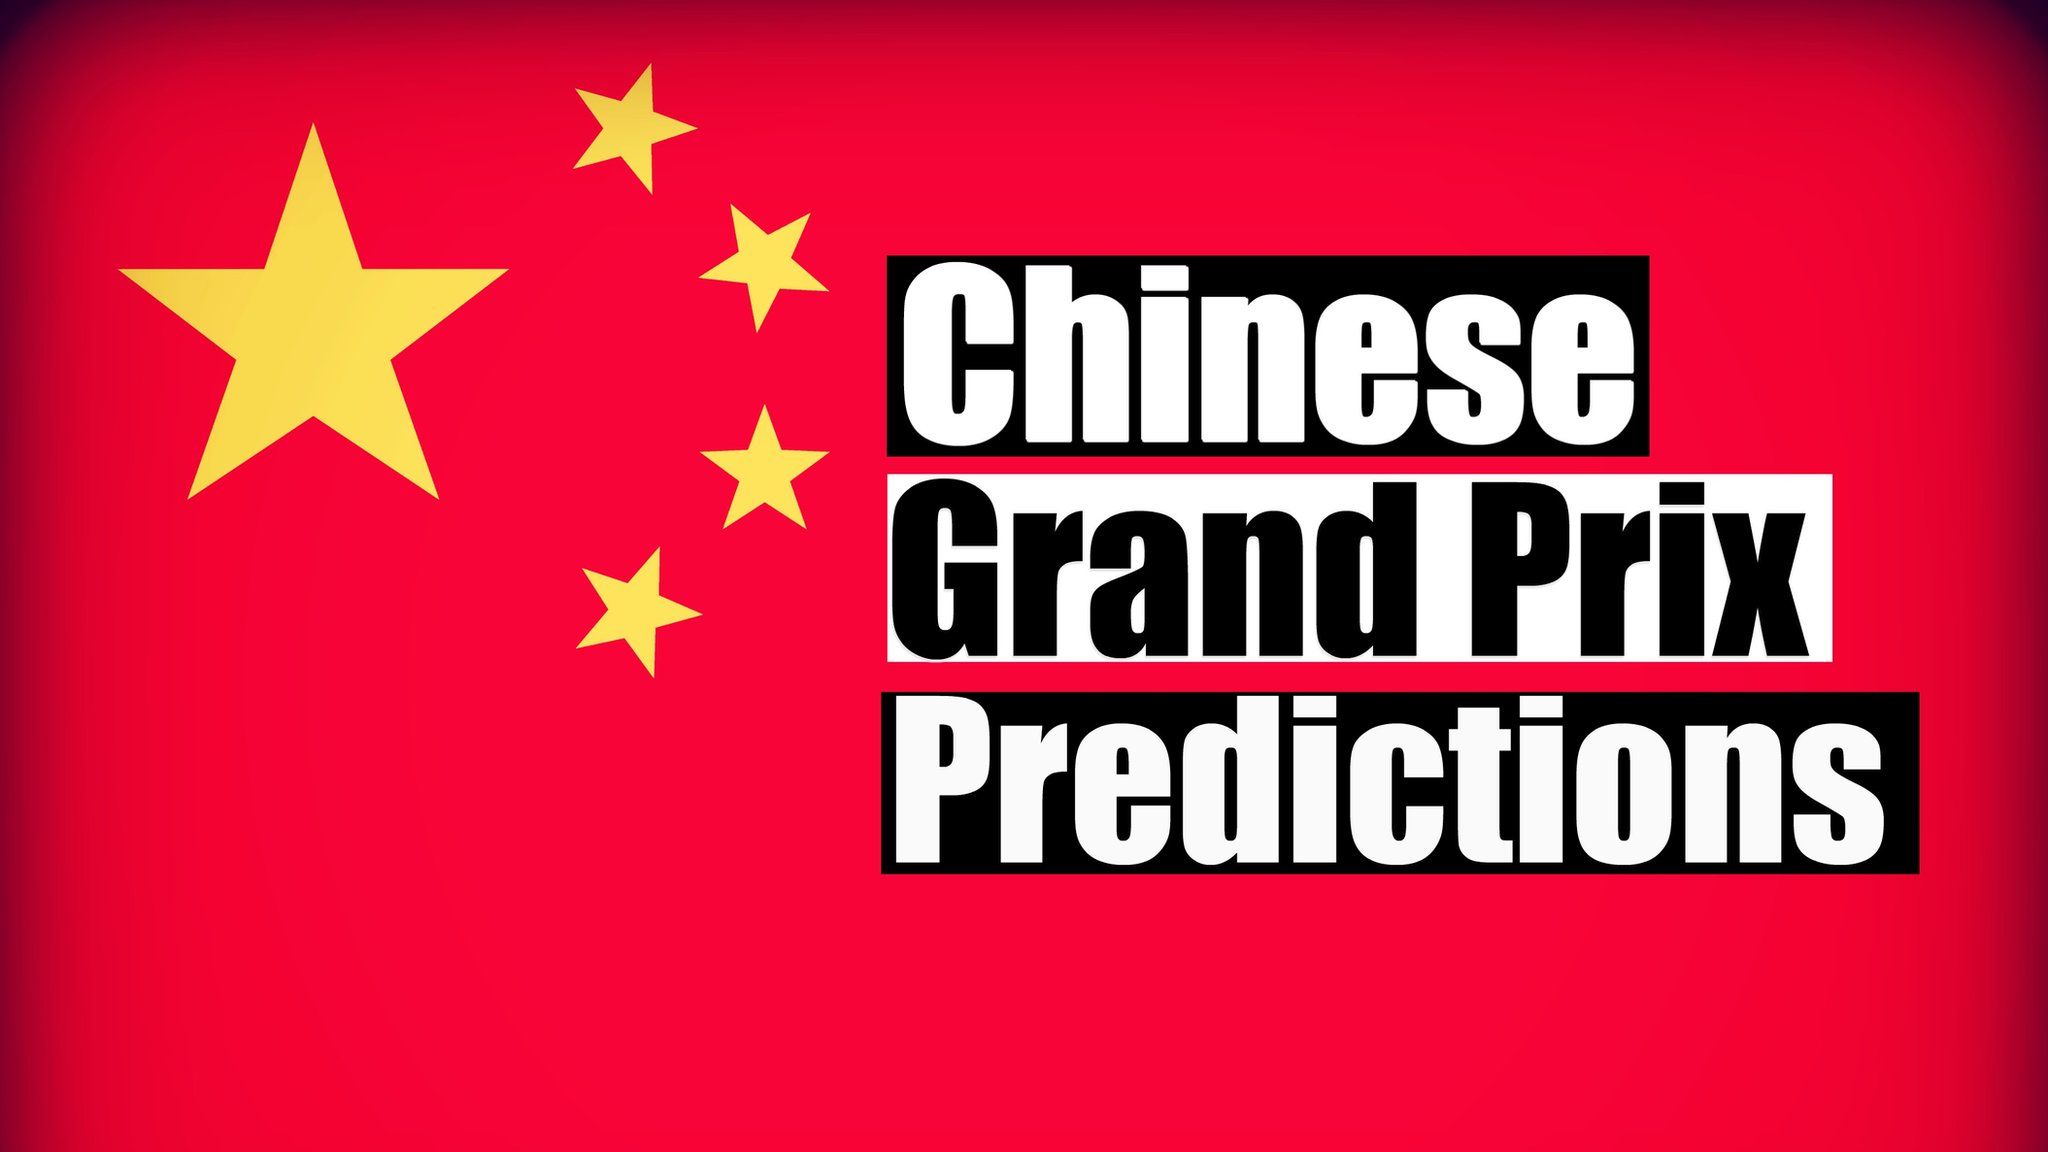 Chinese Grand Prix predictions